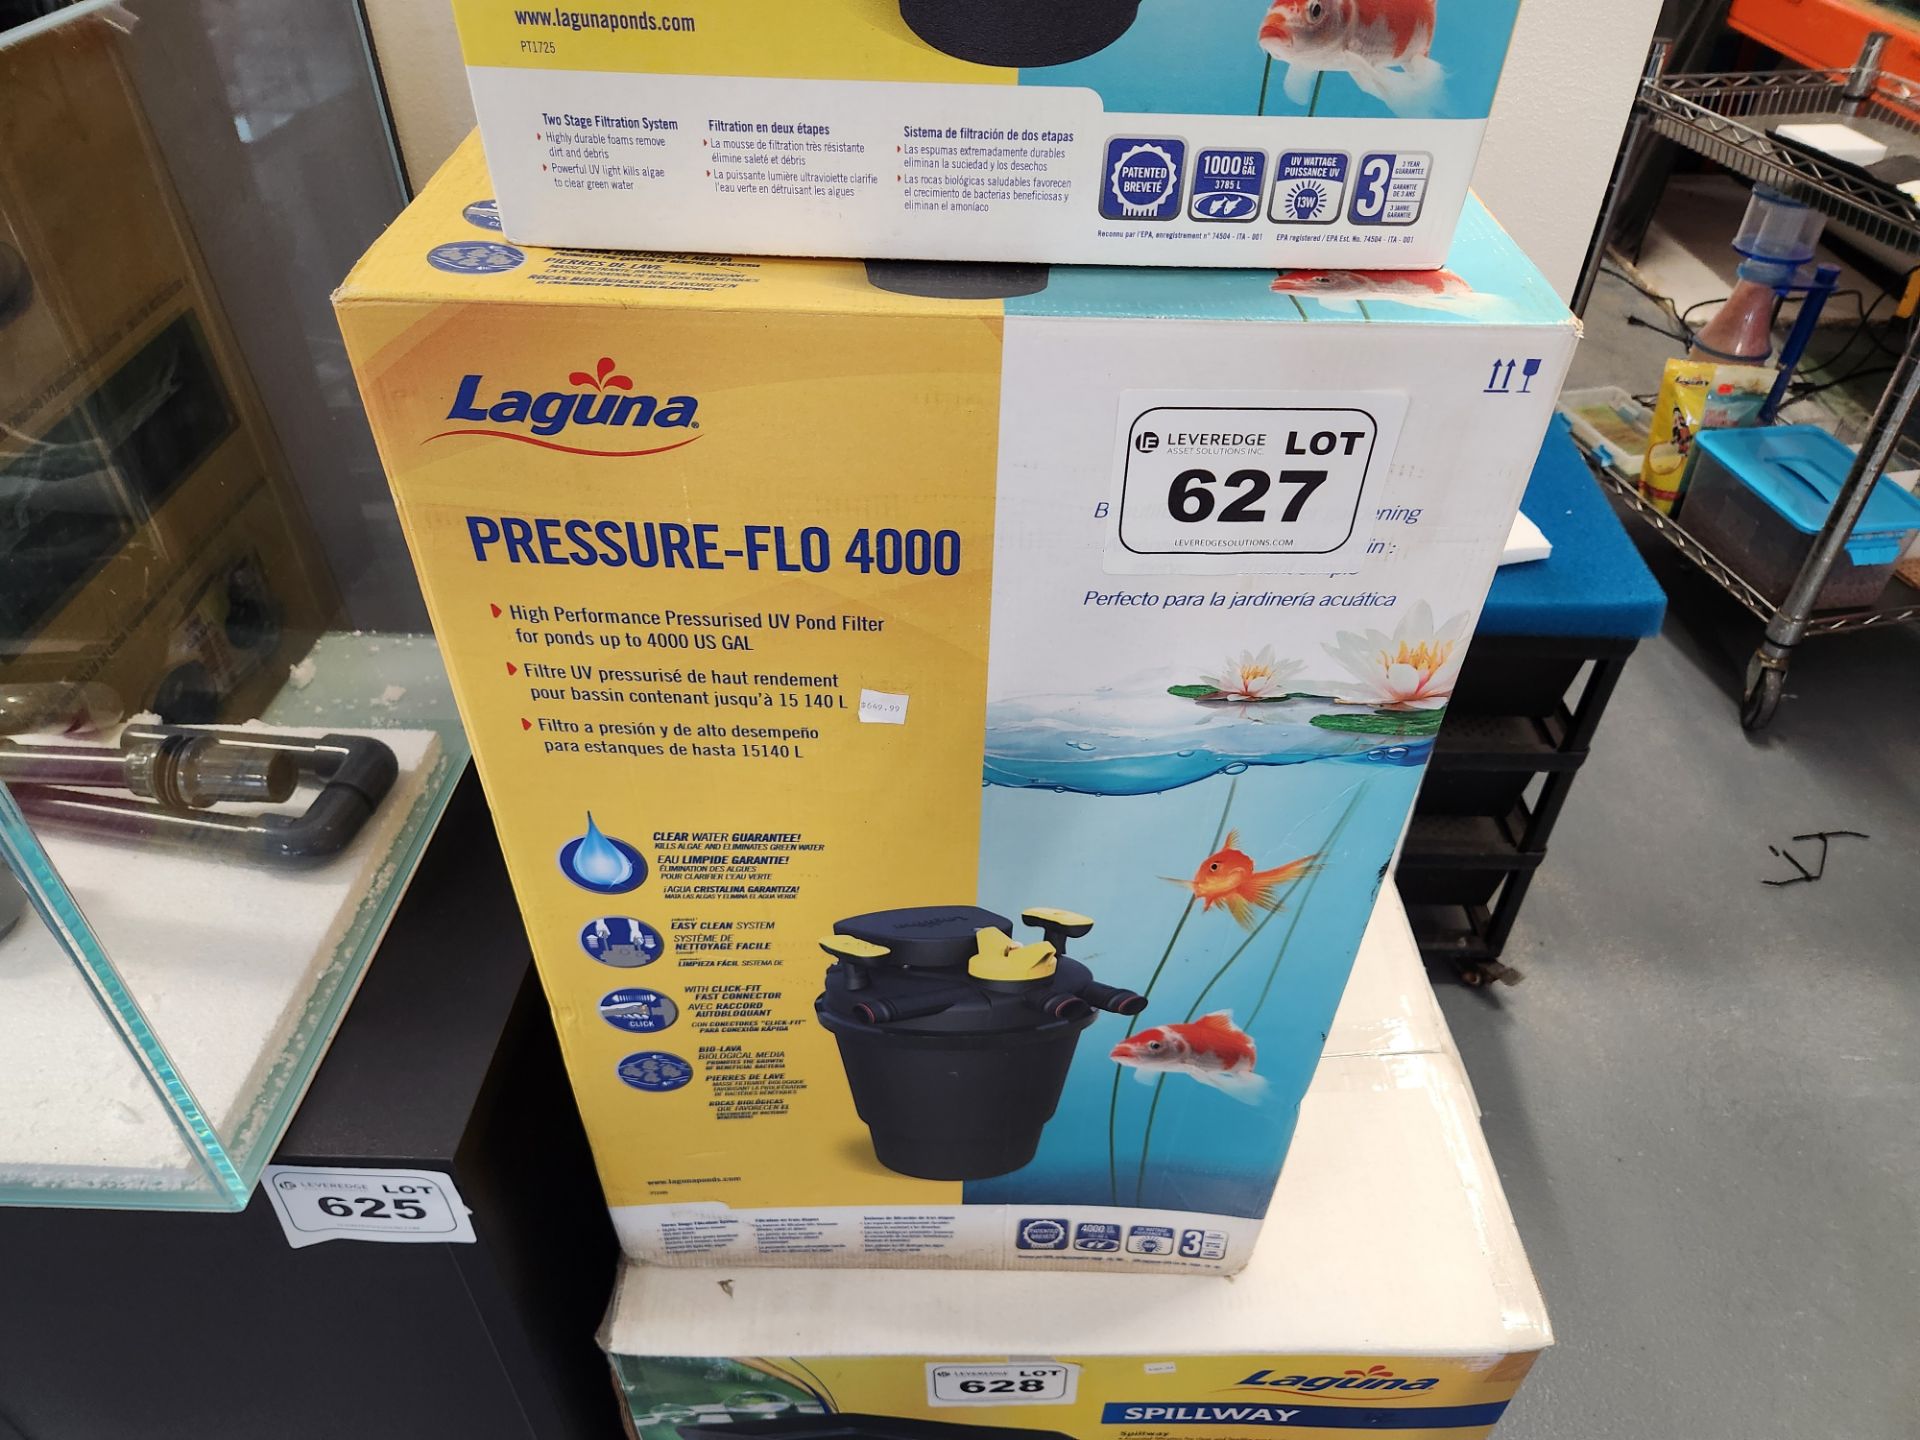 Laguna Pressure Flo-4000 UV Pond Filter